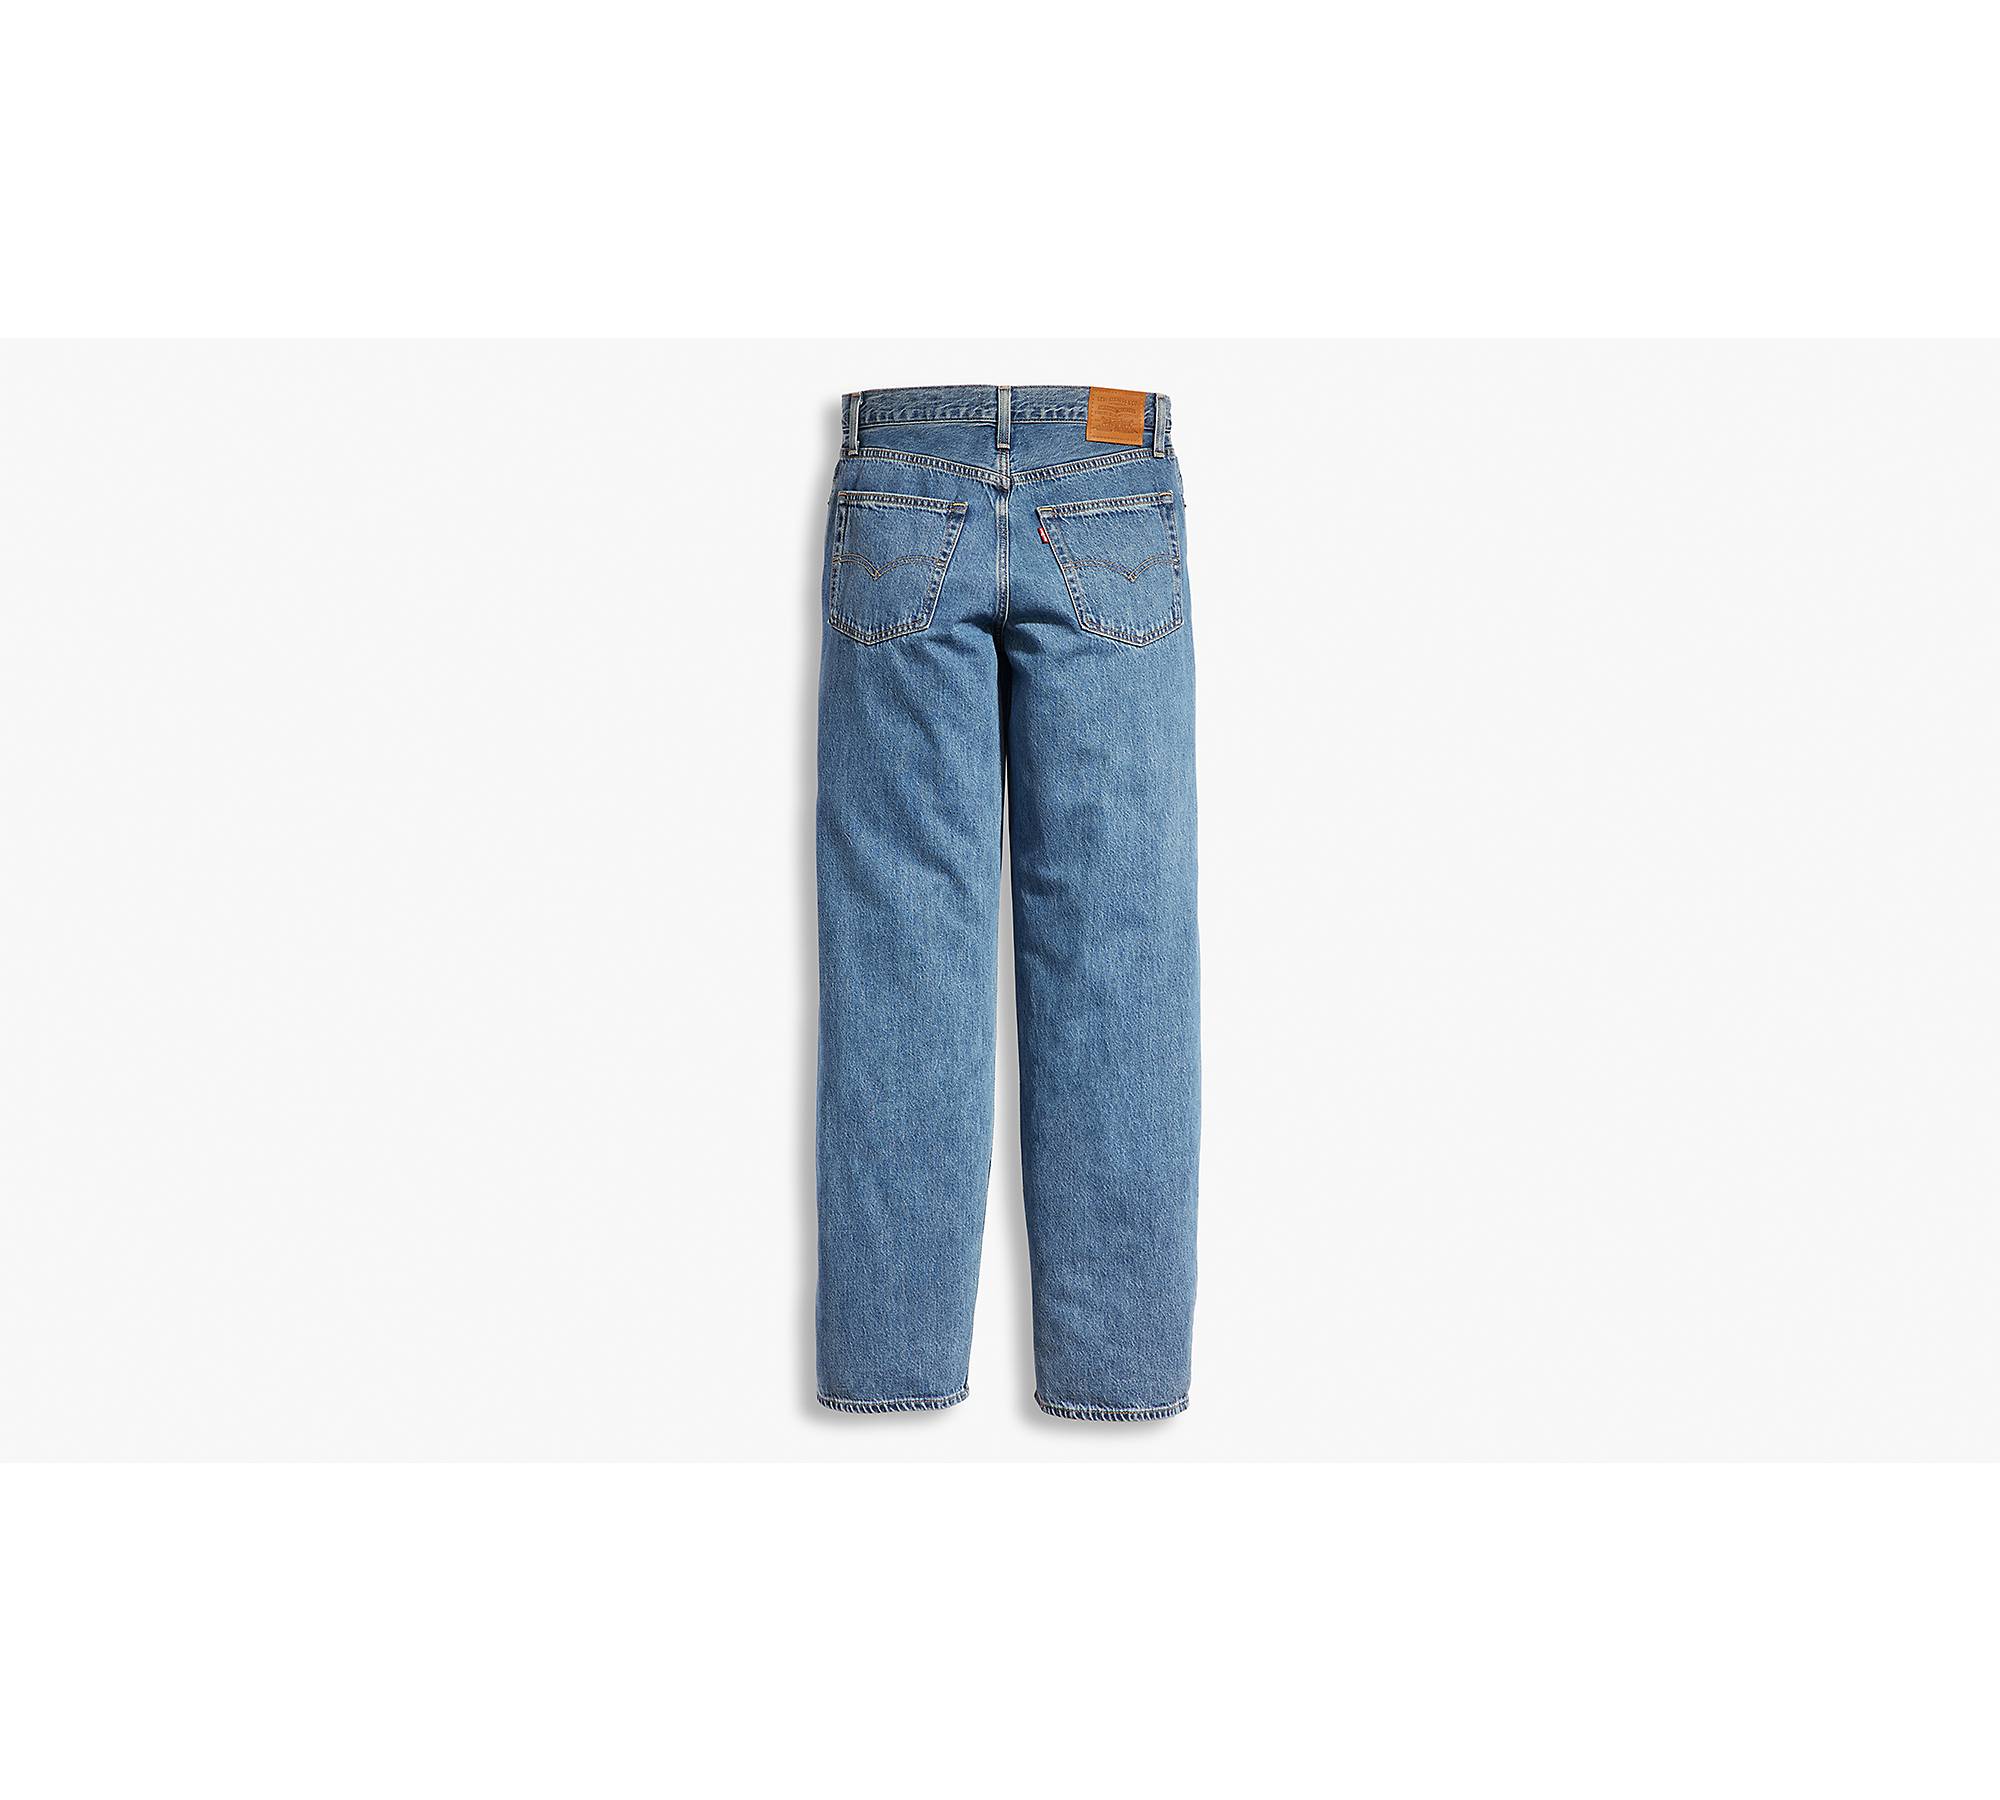 Buy Baggy Jeans Kids online